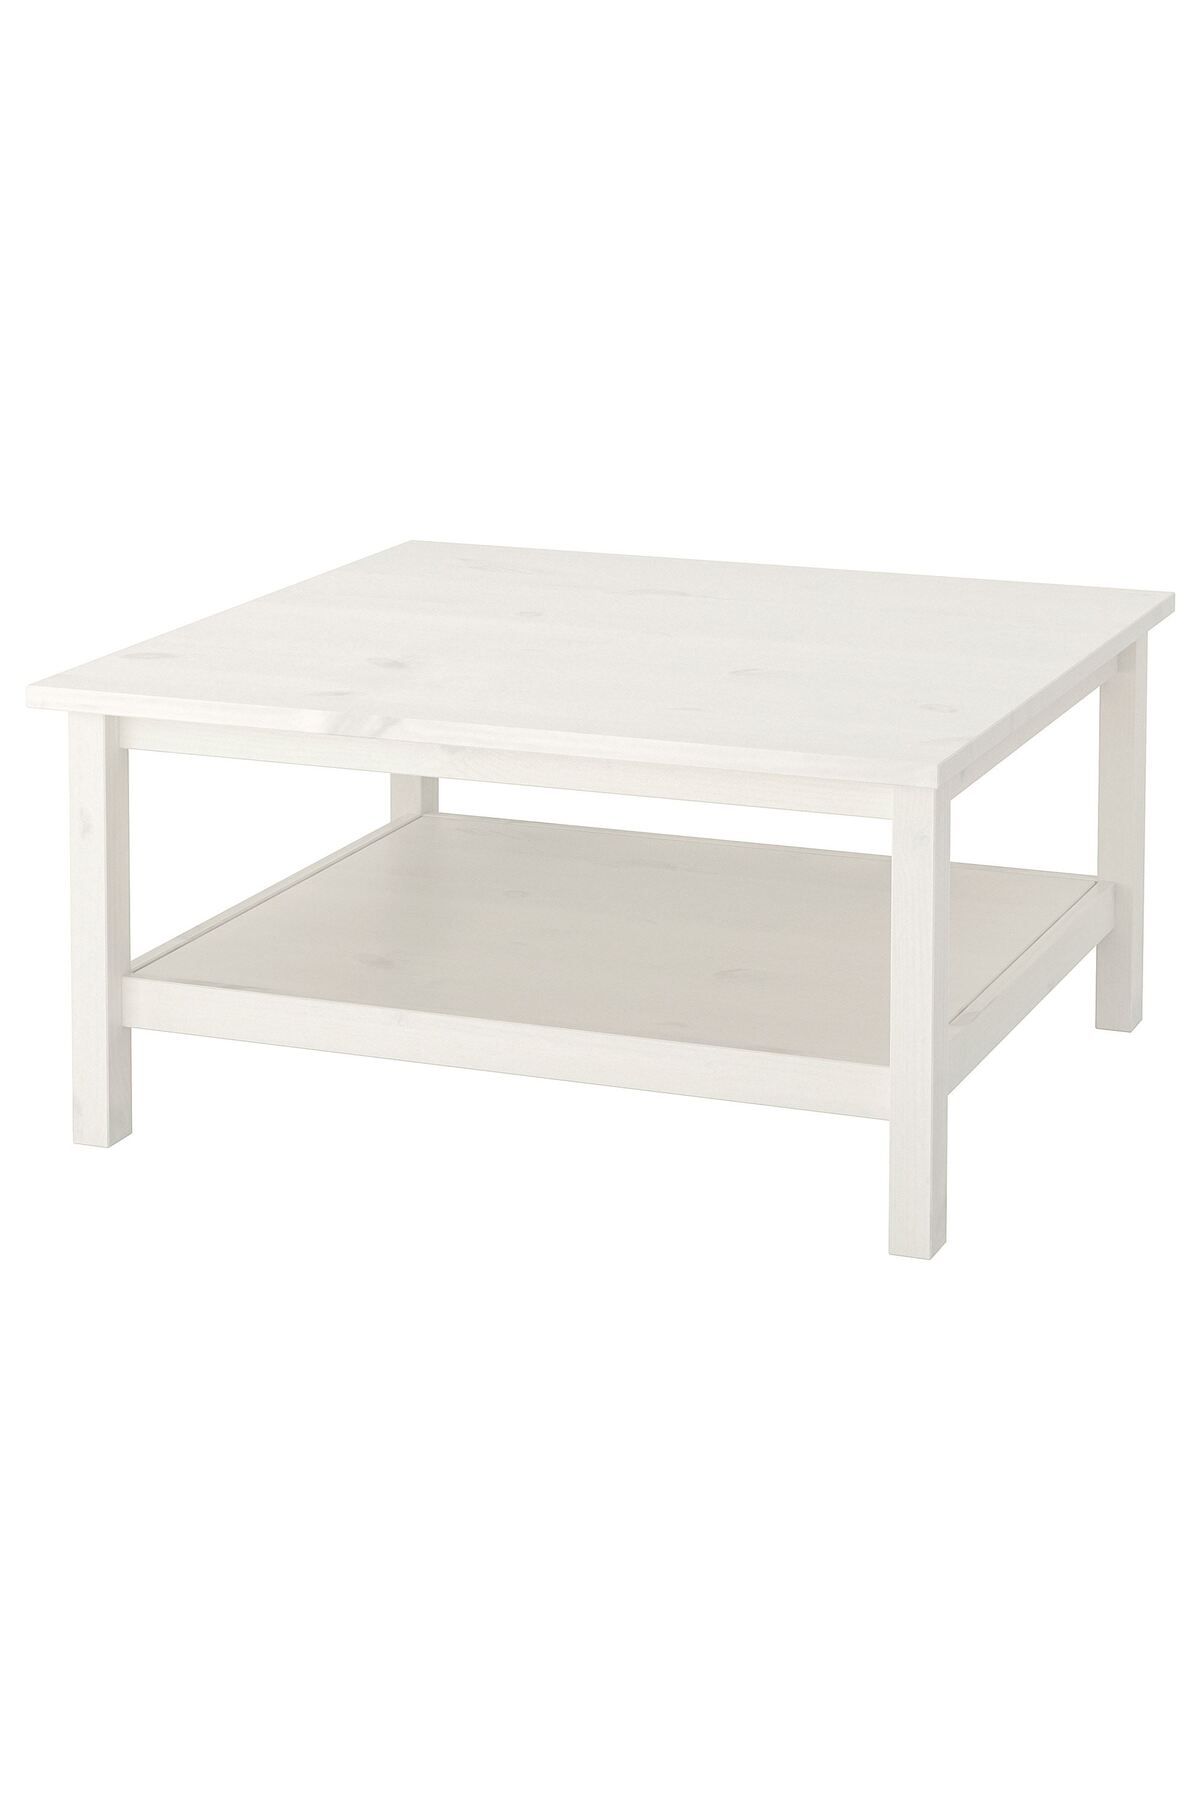 IKEA HEMNES orta sehpa, beyaz, 90x90 cm